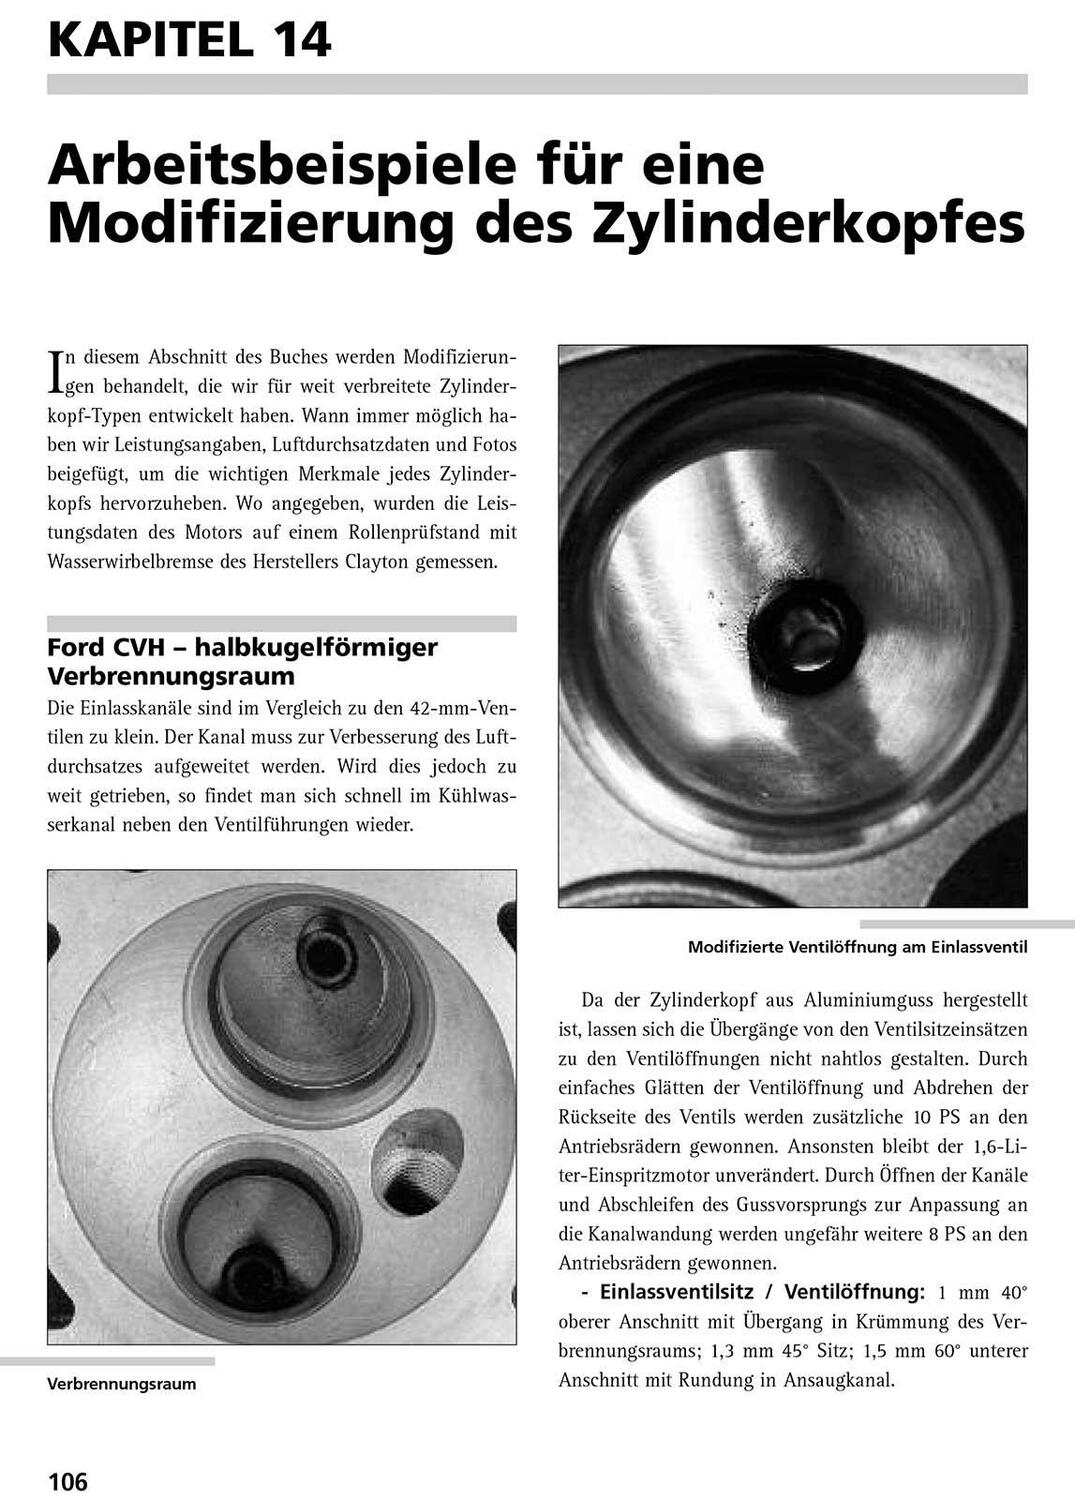 Bild: 9783898803496 | Praxishandbuch Zylinderköpfe | Technik, Tuning, Modifikationen | Buch